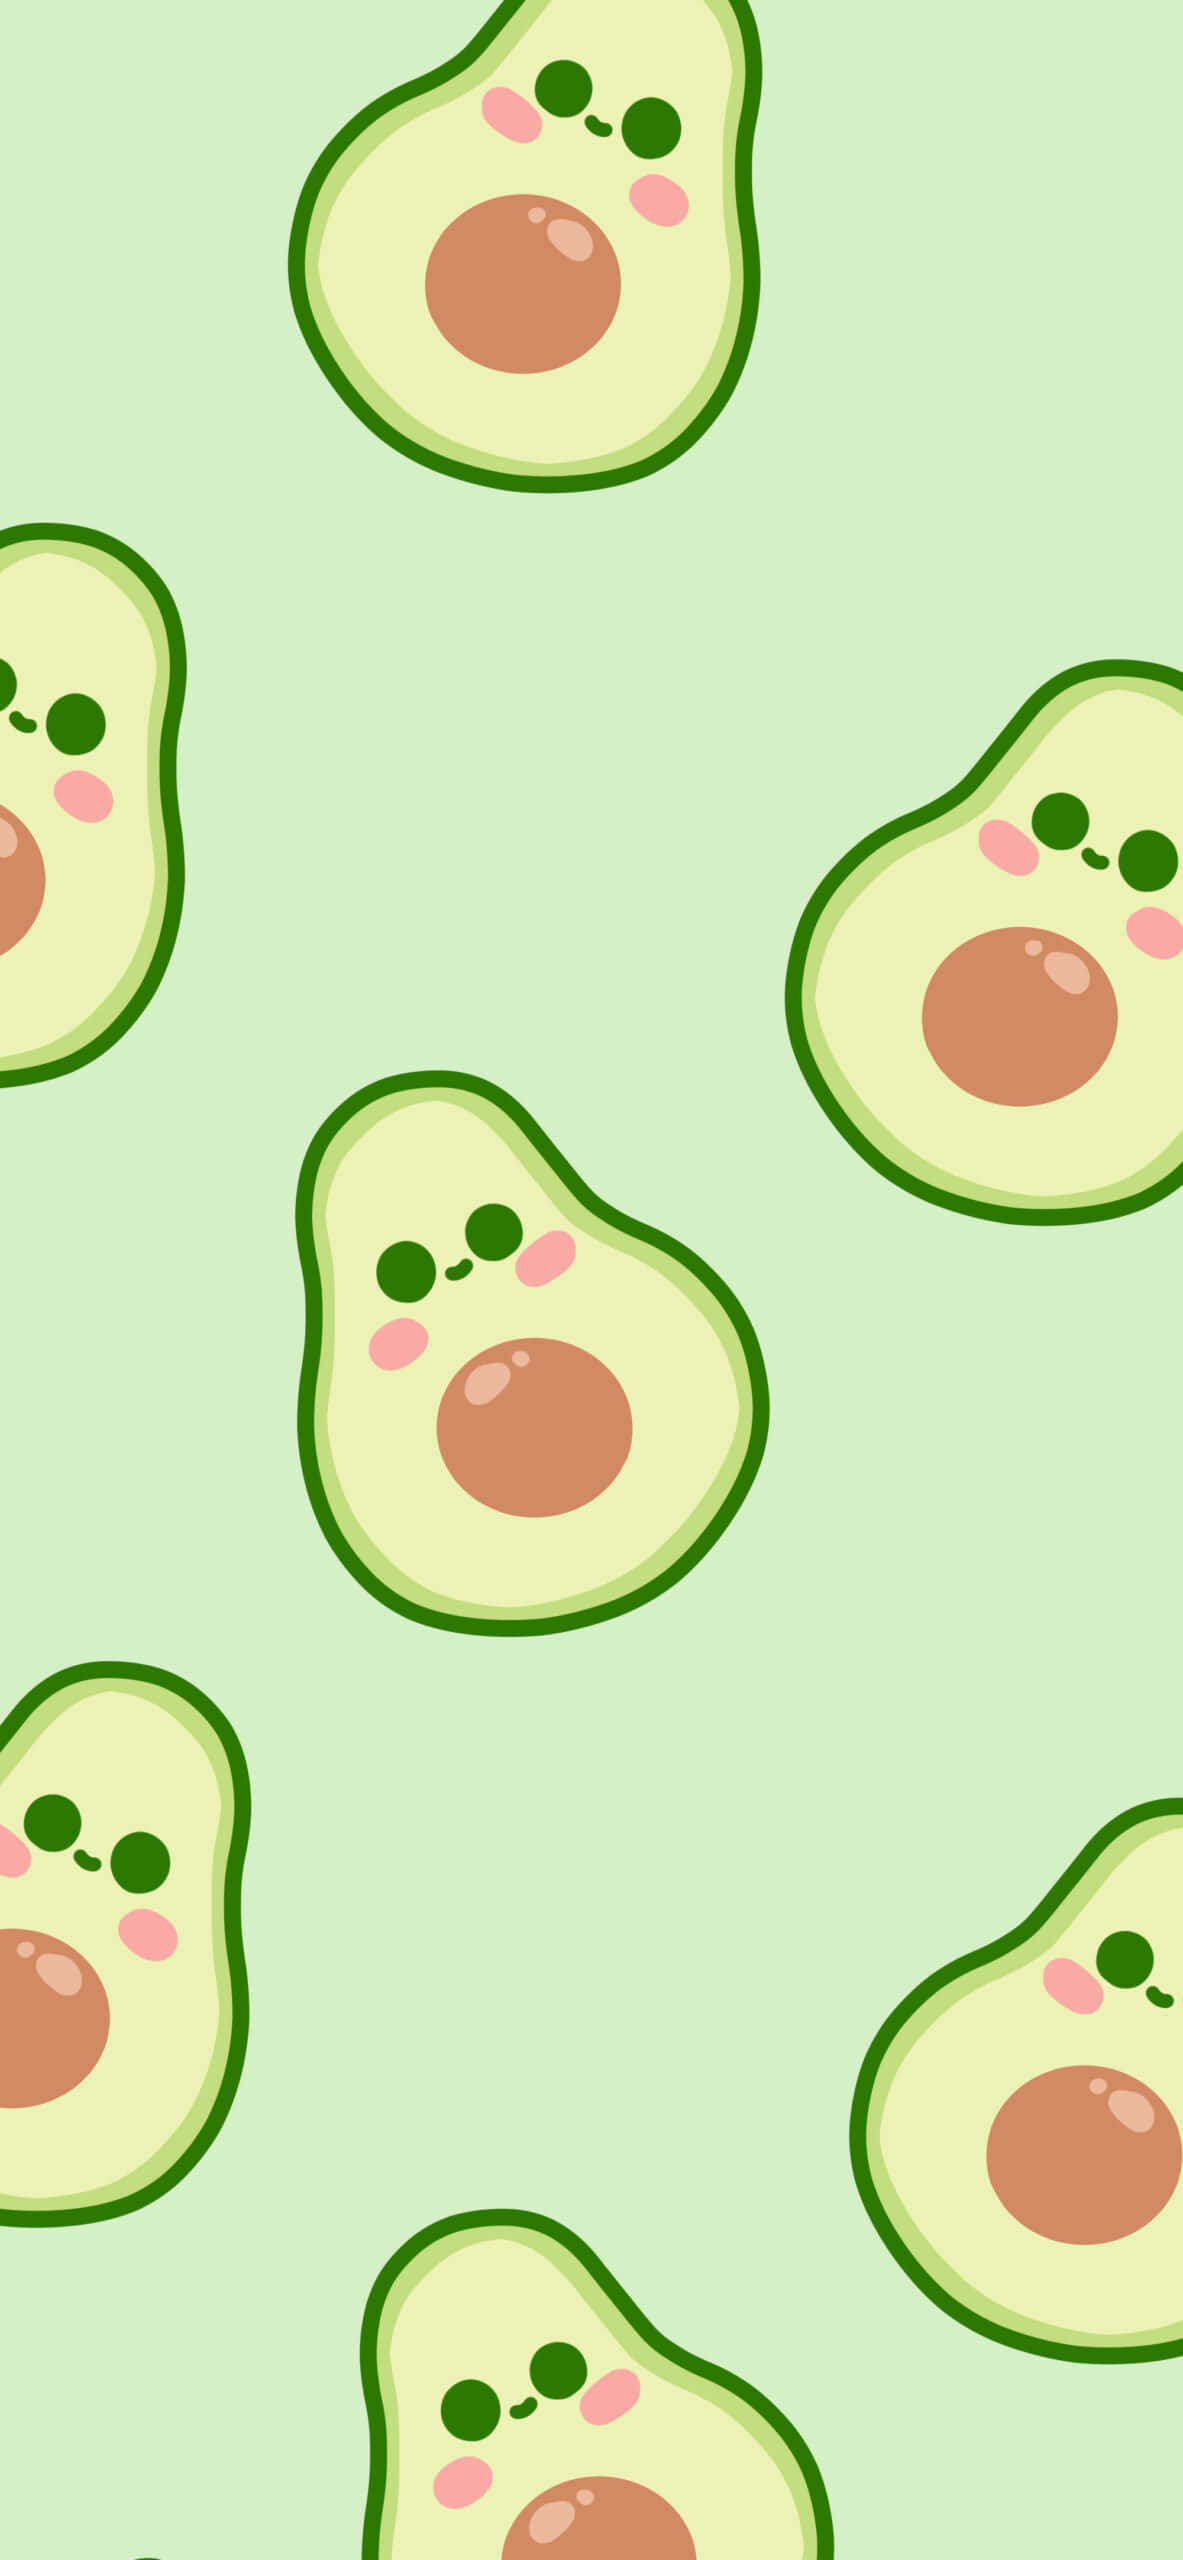 Download Cute Avocado 1183 X 2560 Background | Wallpapers.com